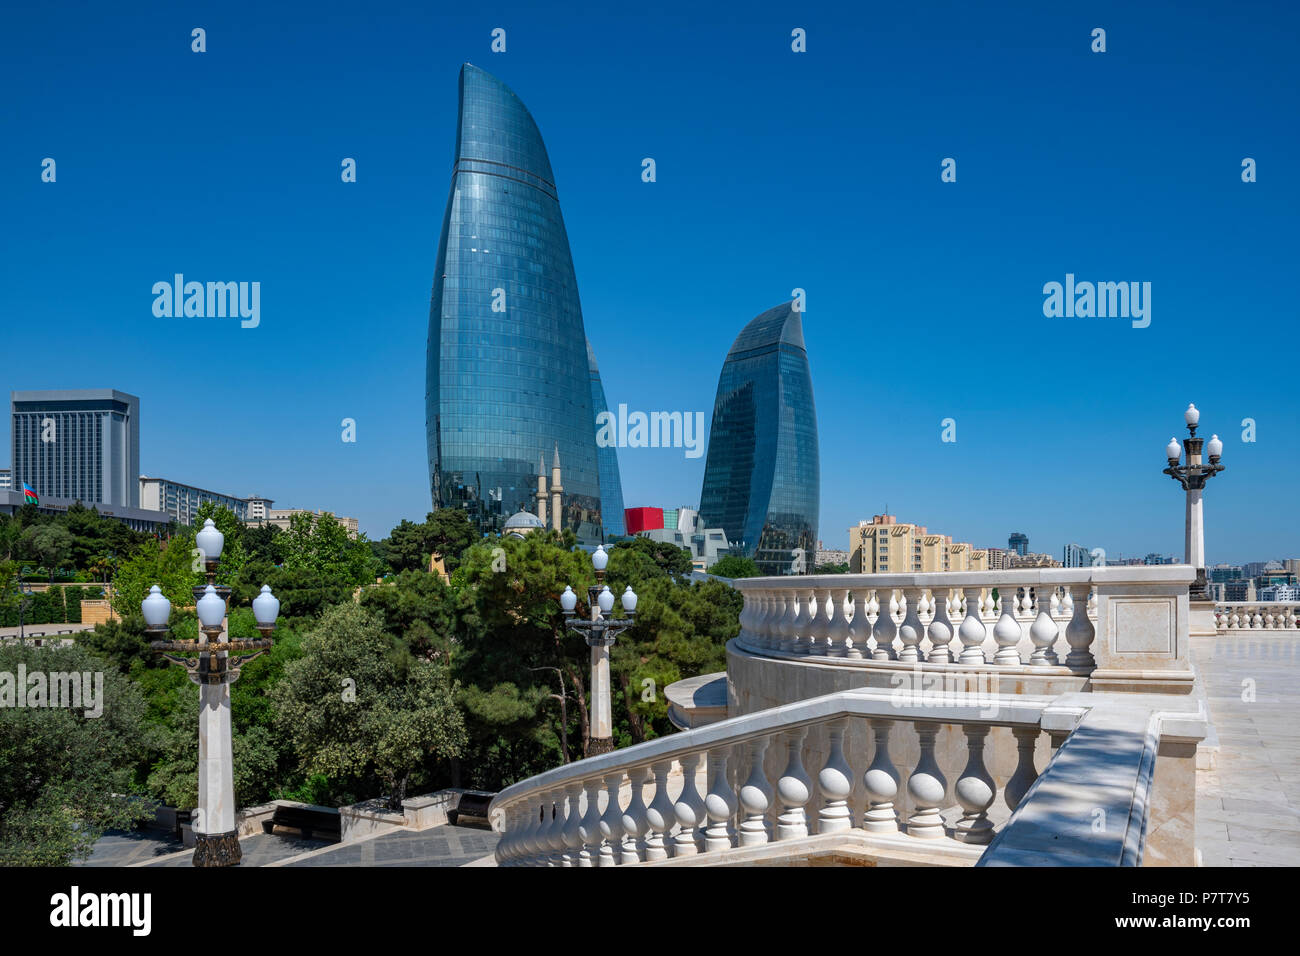 The Flame Towers seen from the Dagustu Park in Baku,Azerbaijan Stock Photo